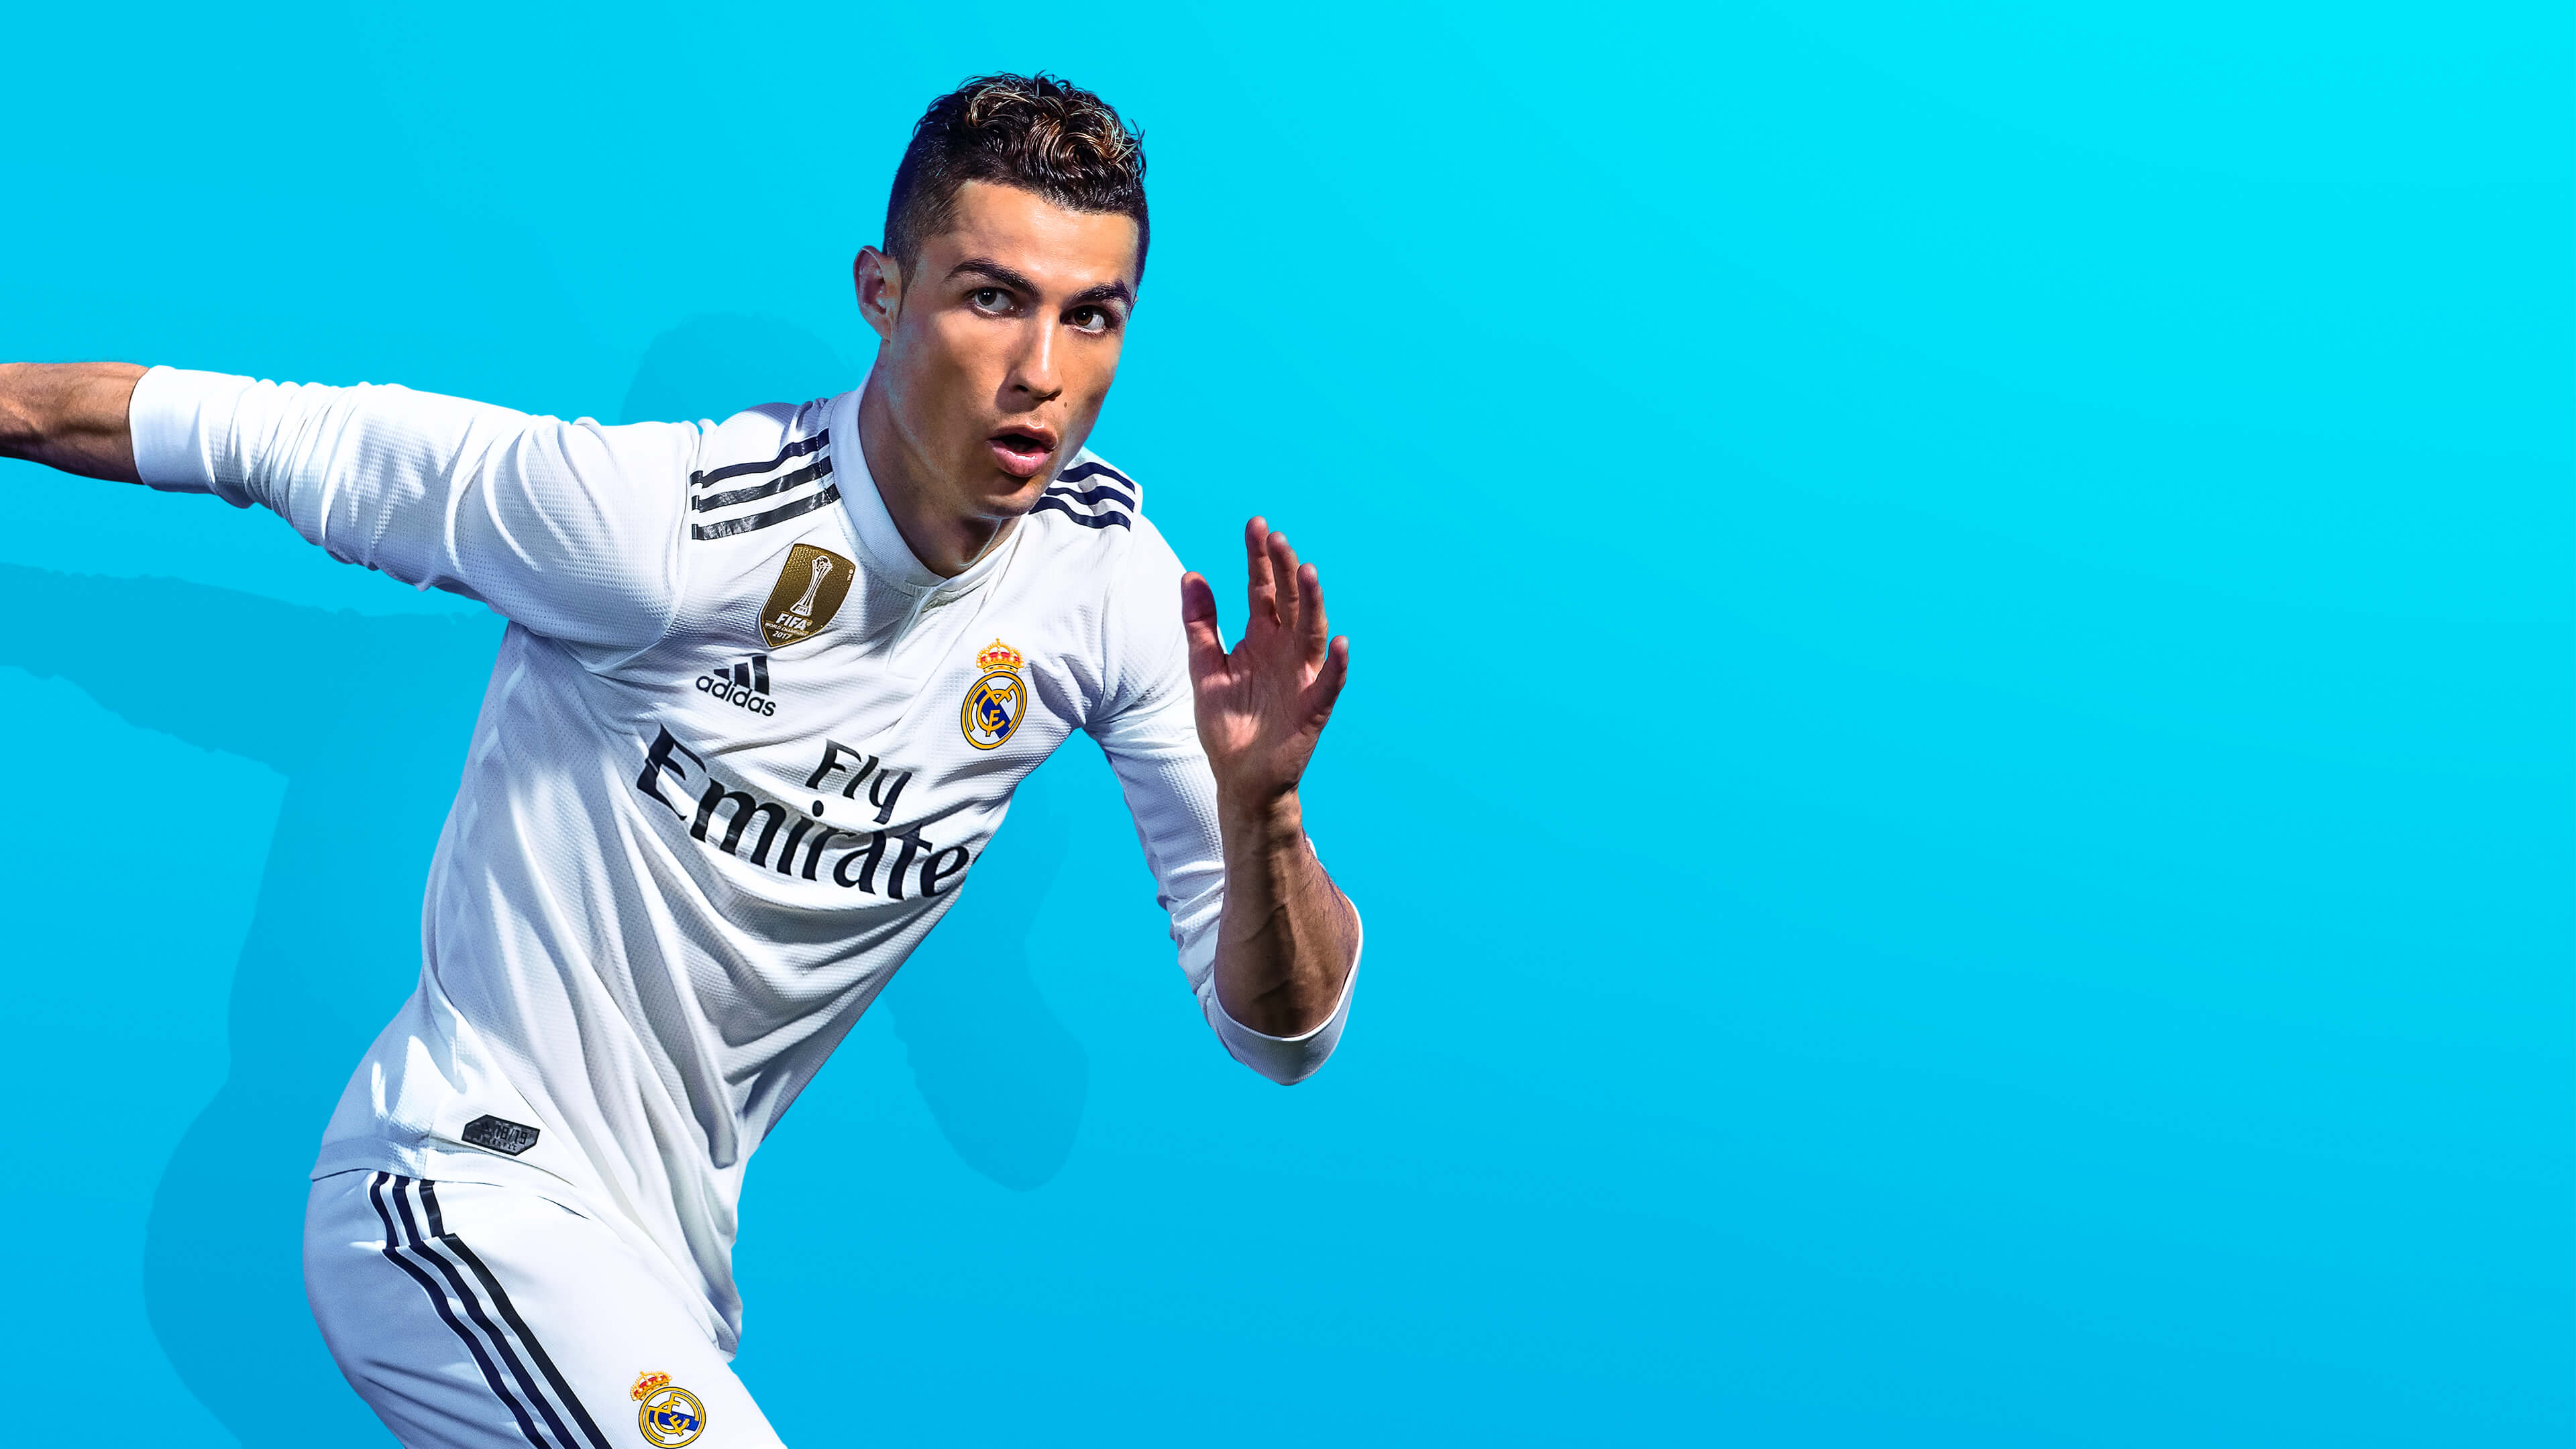 4K Cristiano Ronaldo Wallpaper and Background Image